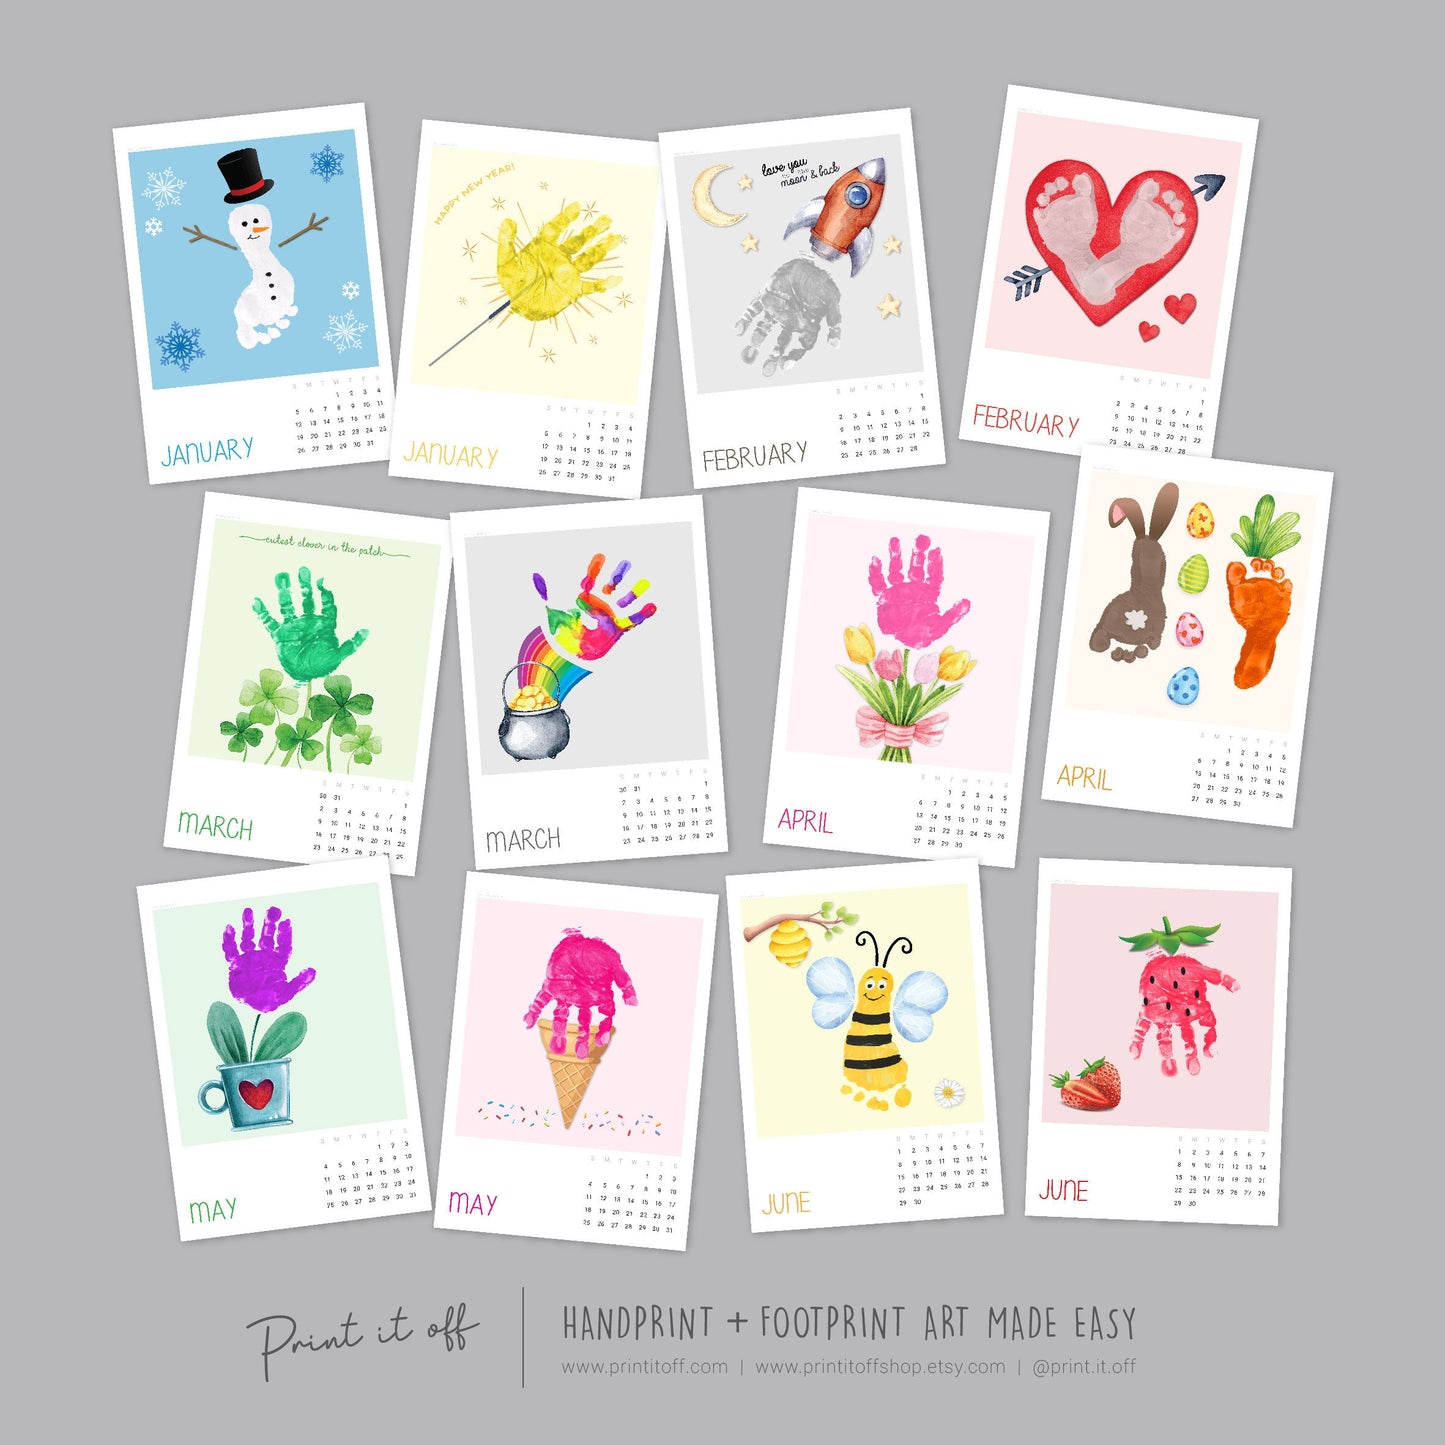 2025 Handprint Footprint Calendar Art Craft / DIY Gift Child Baby Kids Toddler Activity Memory Keepsake / Print It Off 0760